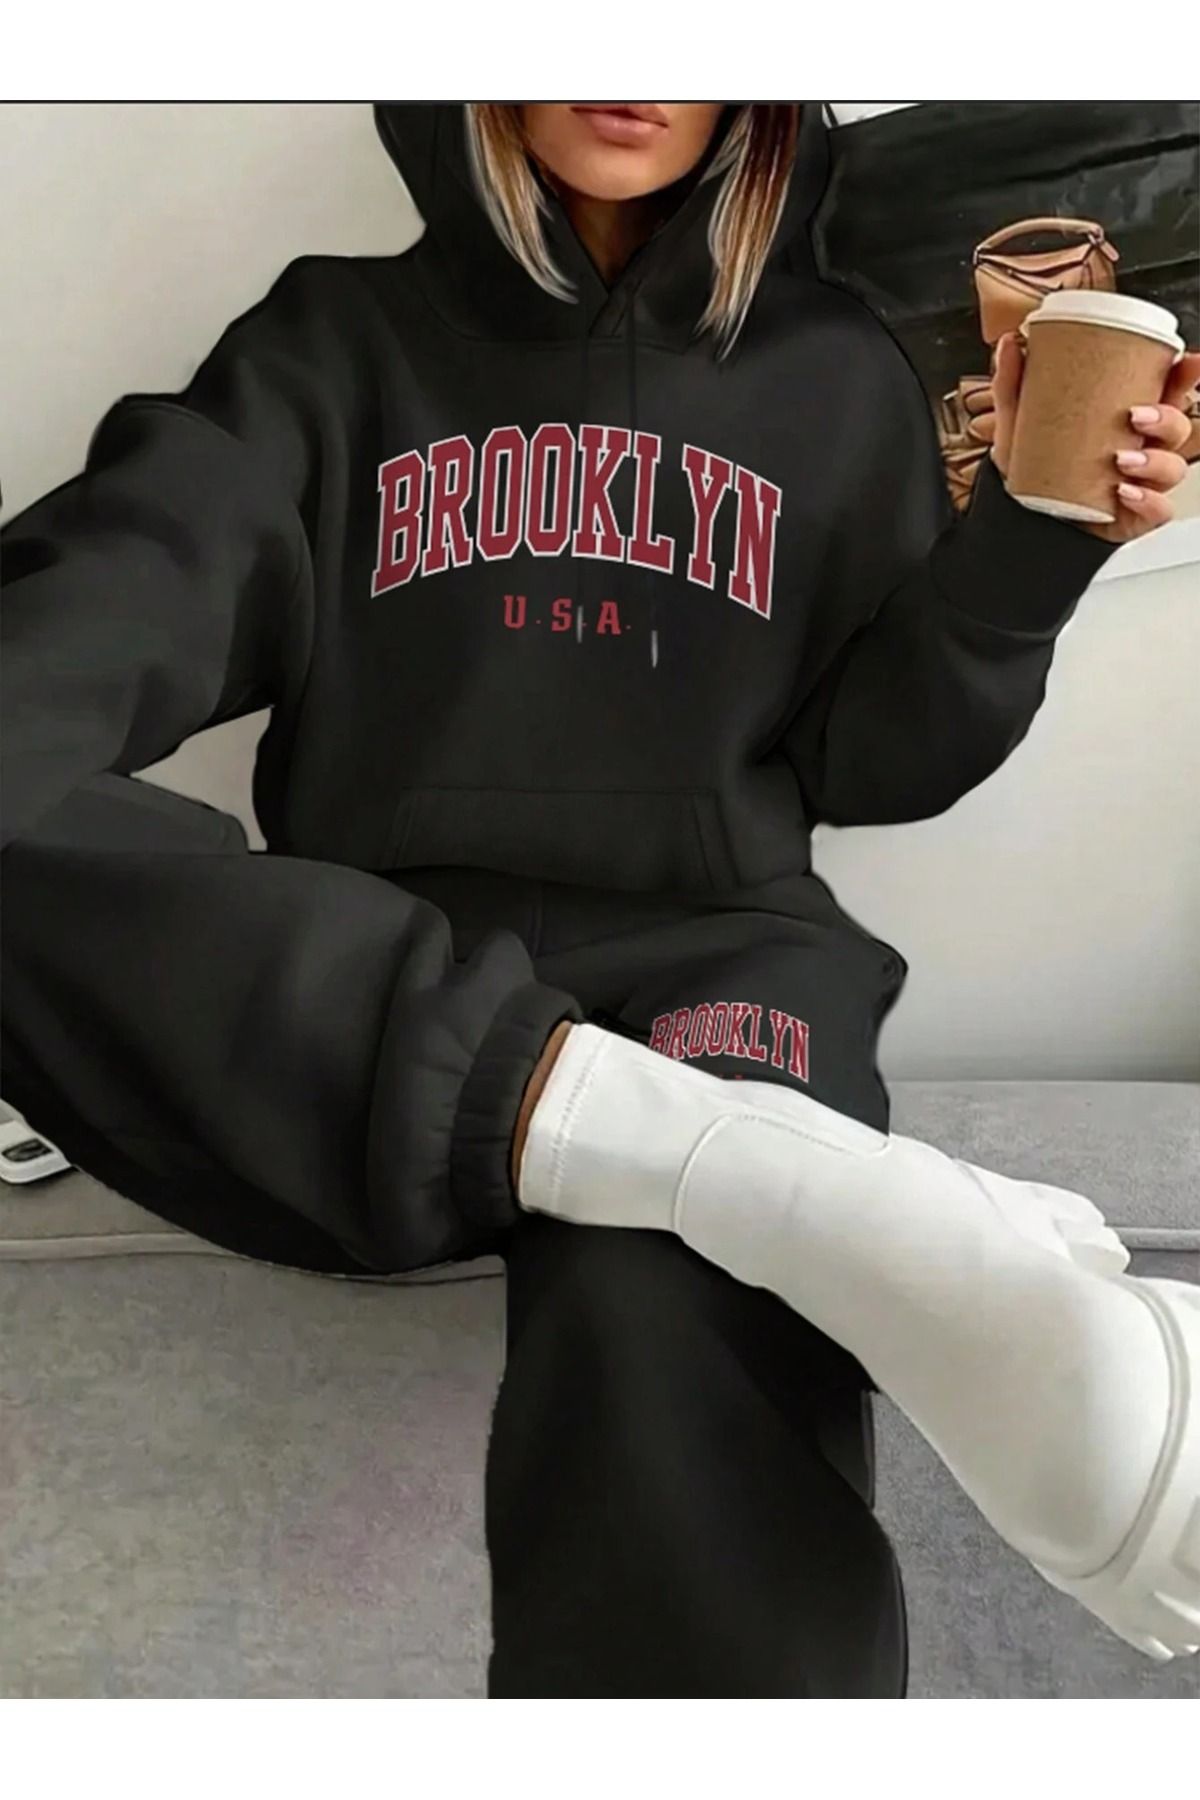 Cool Art Brooklyn U.S.A Sweatshirt Eşofman Altı Jogger - Siyah Baskılı Alt Üst Eşofman Takımı Kapüşonlu